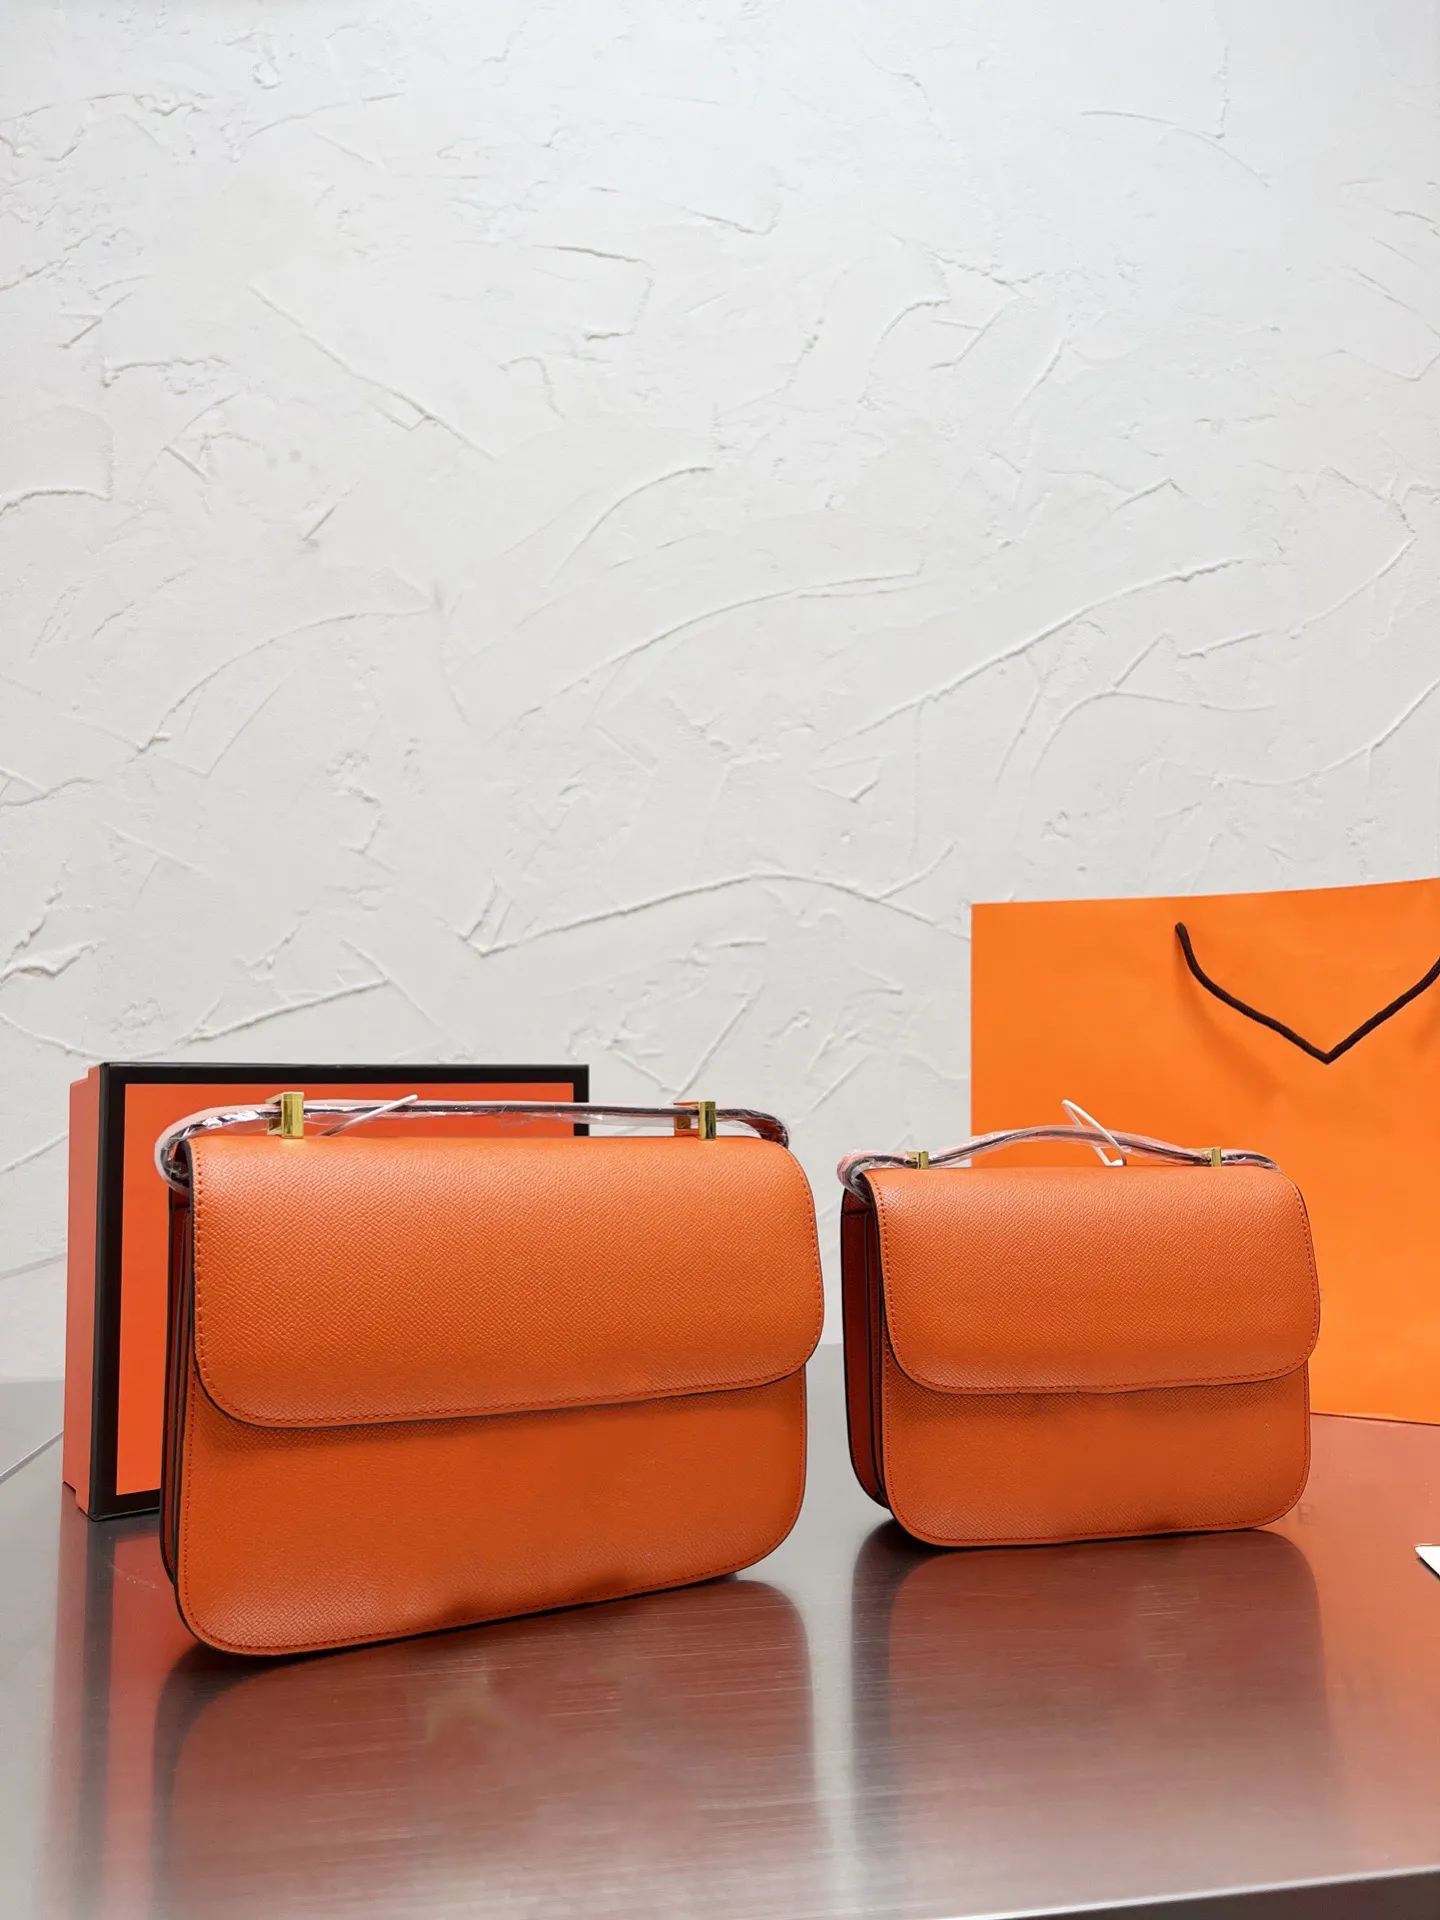 2022 Hot Women Luxury Designer Based Bag Crossbody Counter Bag Classic and Small Plate Pochette Tote Lady Bags حقيقية حقيبة يد جلدية الحجم: 19 سم 24 سم